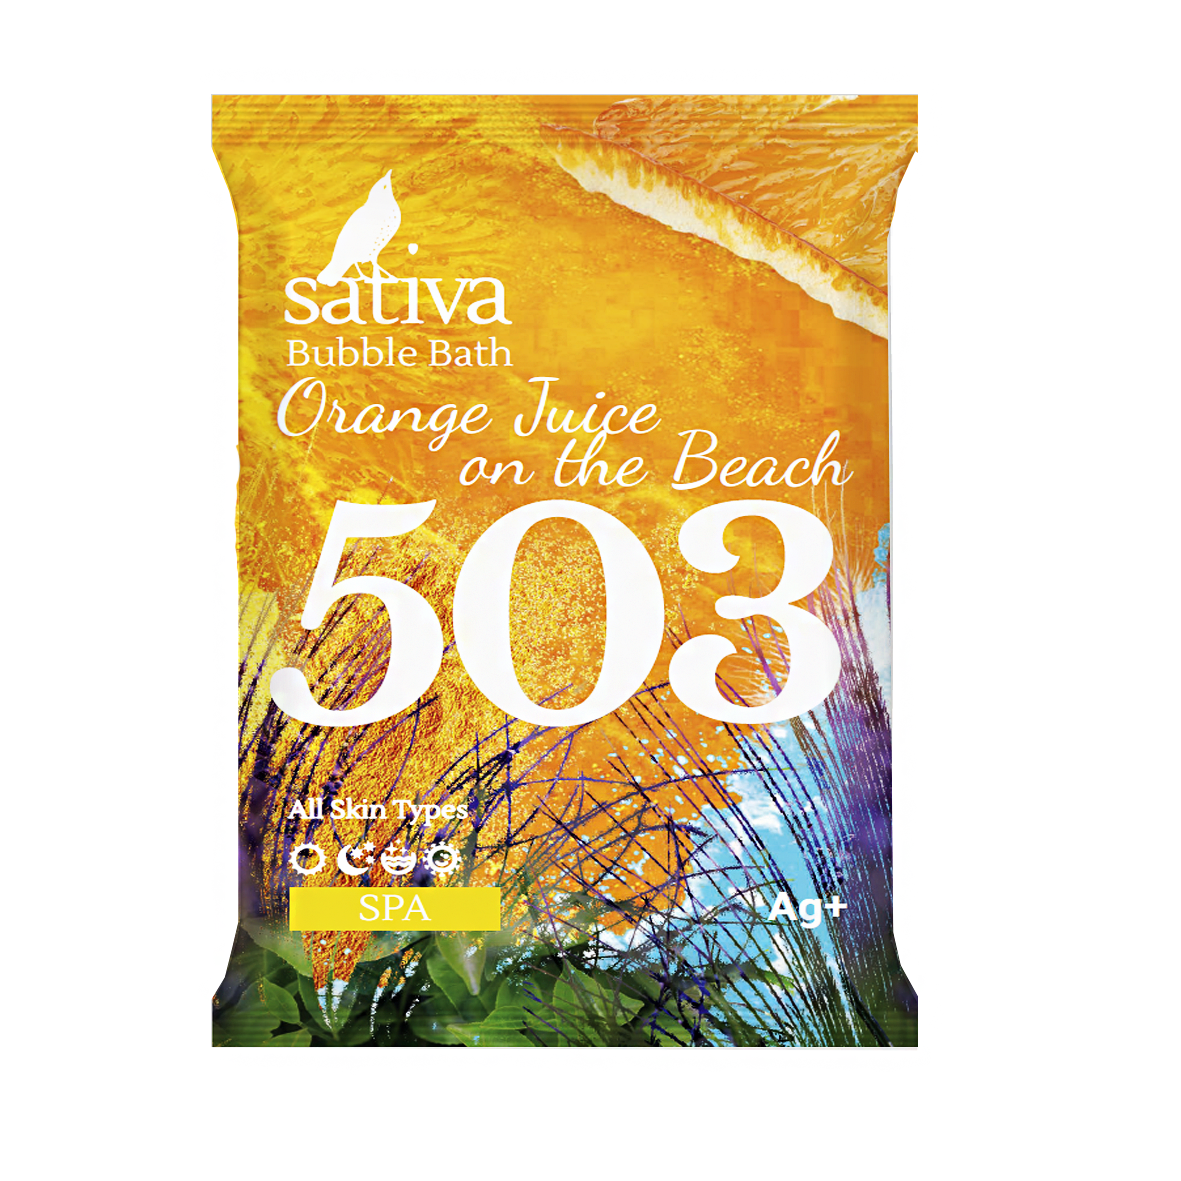 Sativa Пена для ванны «Апельсиновый фреш на пляже» №503, 15г/ Bubble Bath «Orange Juice on the Beach» №503, 15g